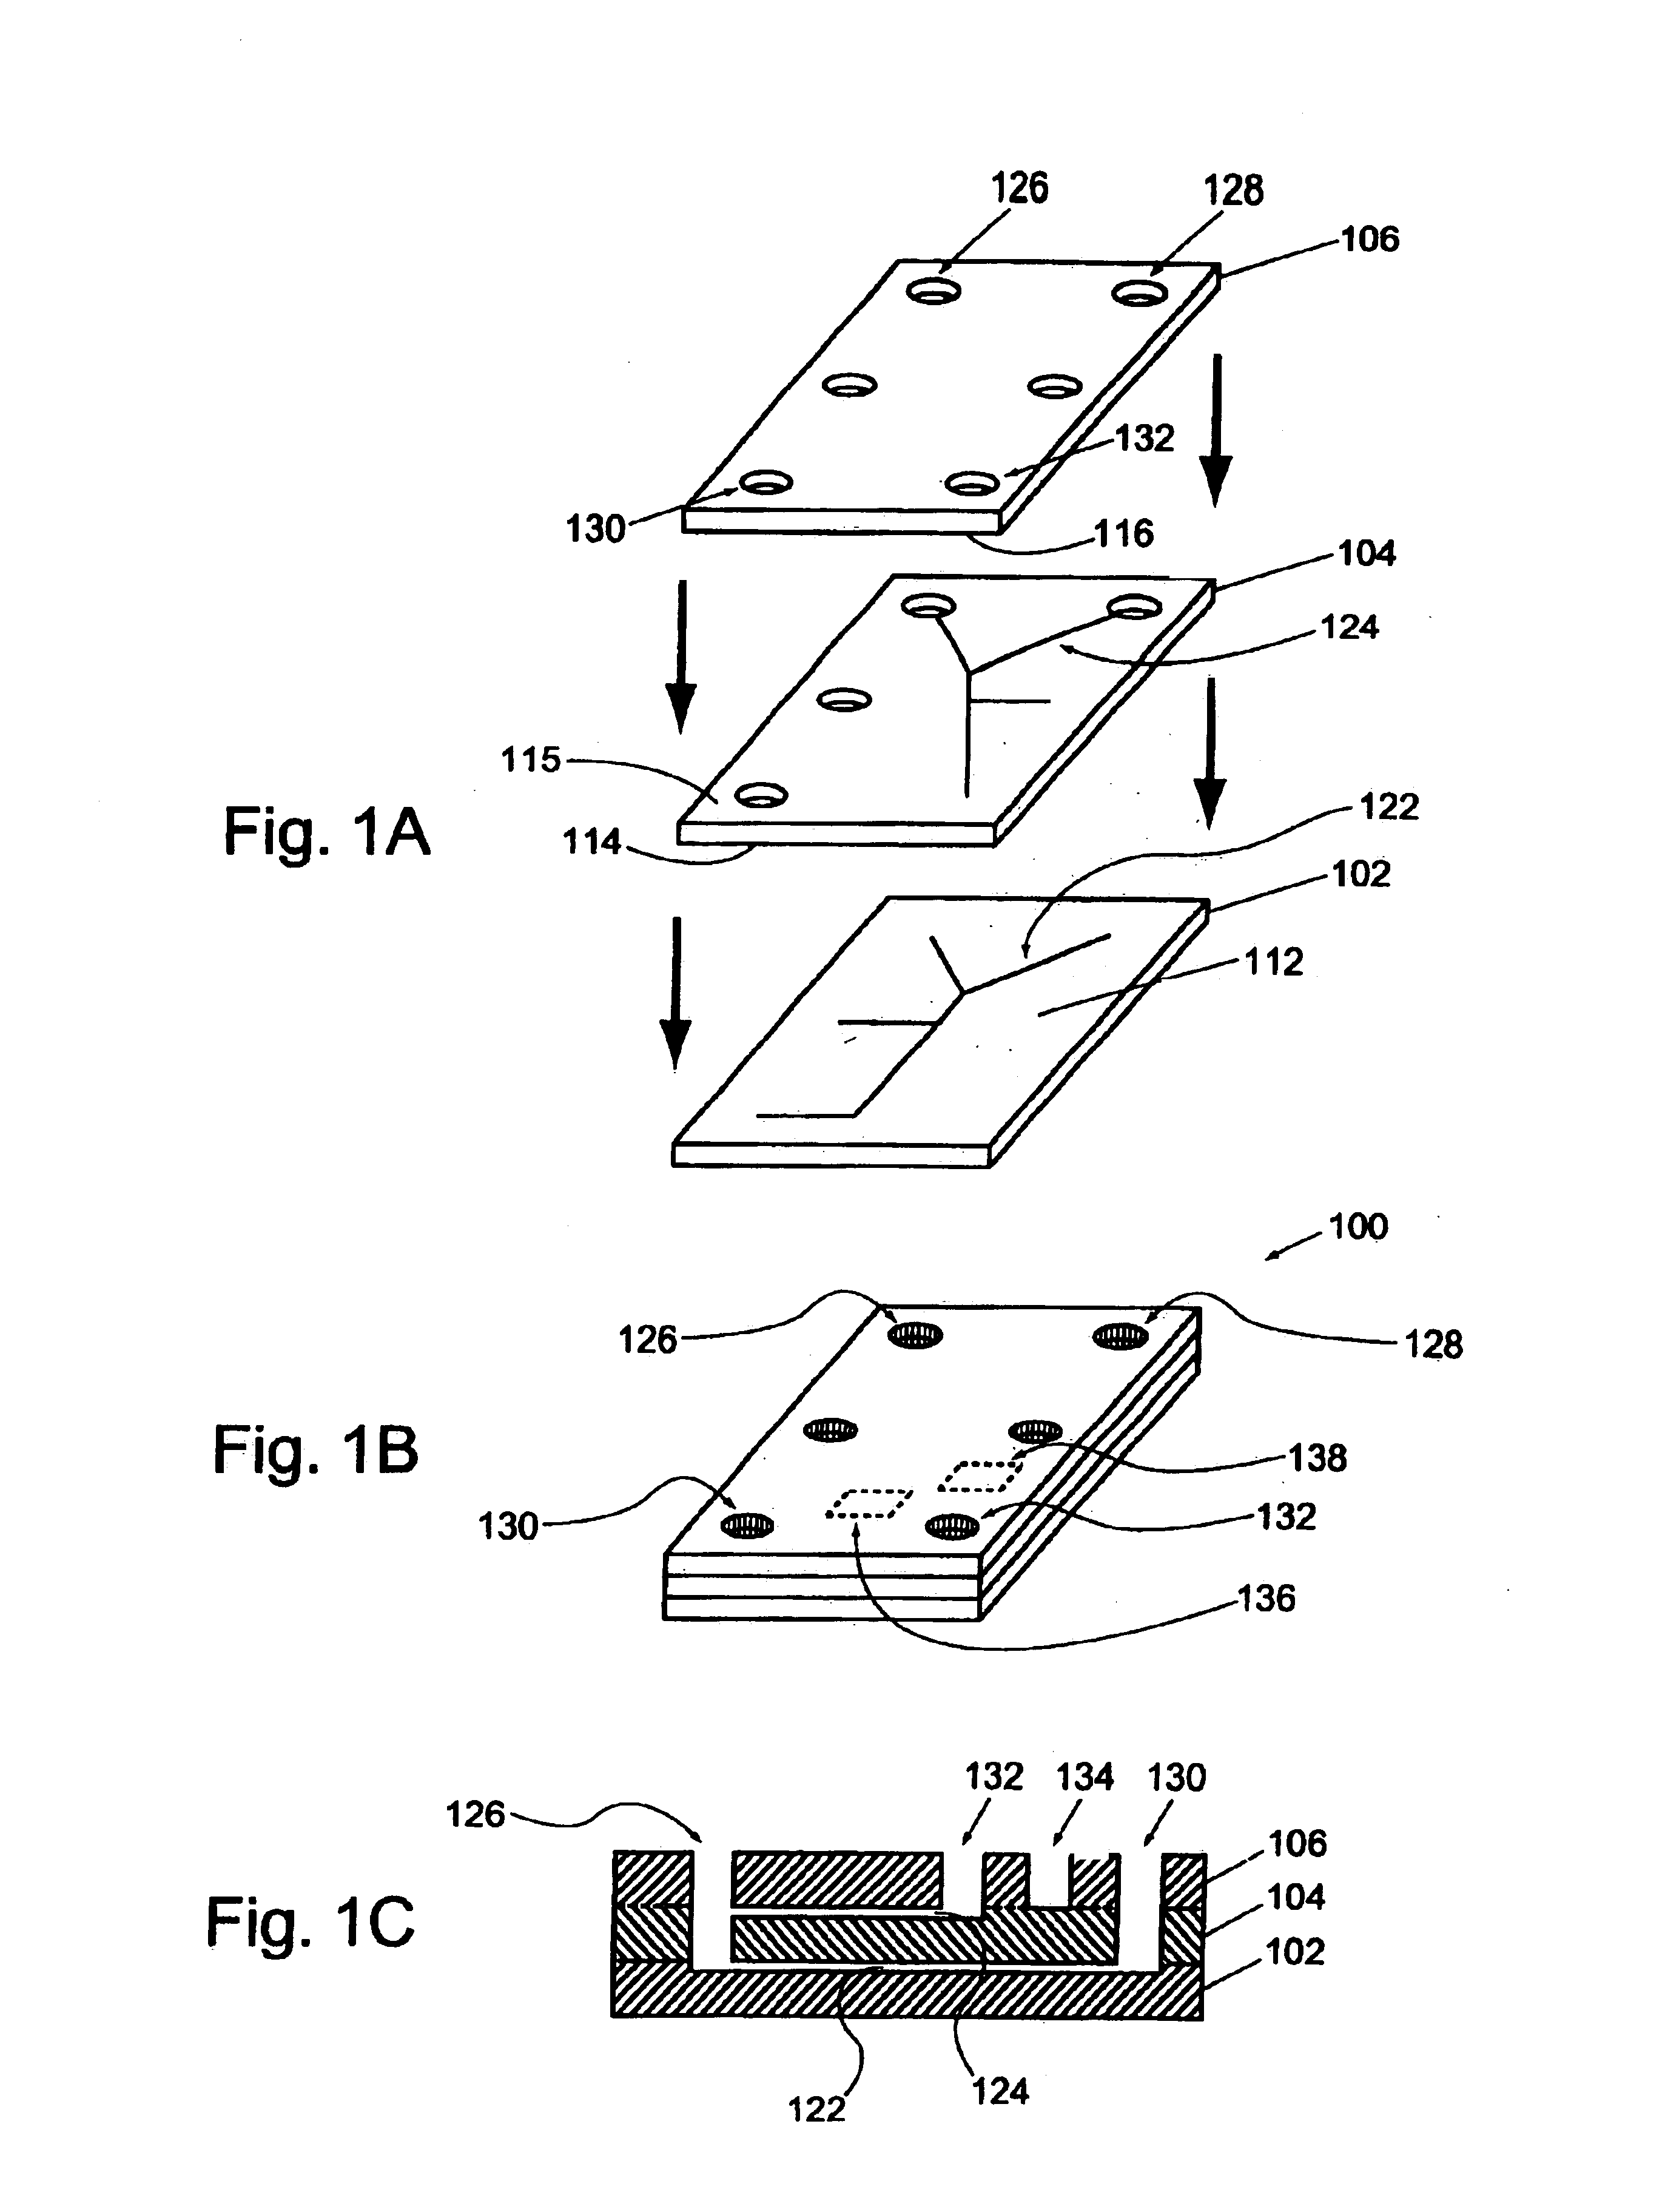 Multi-layer microfluidic devices